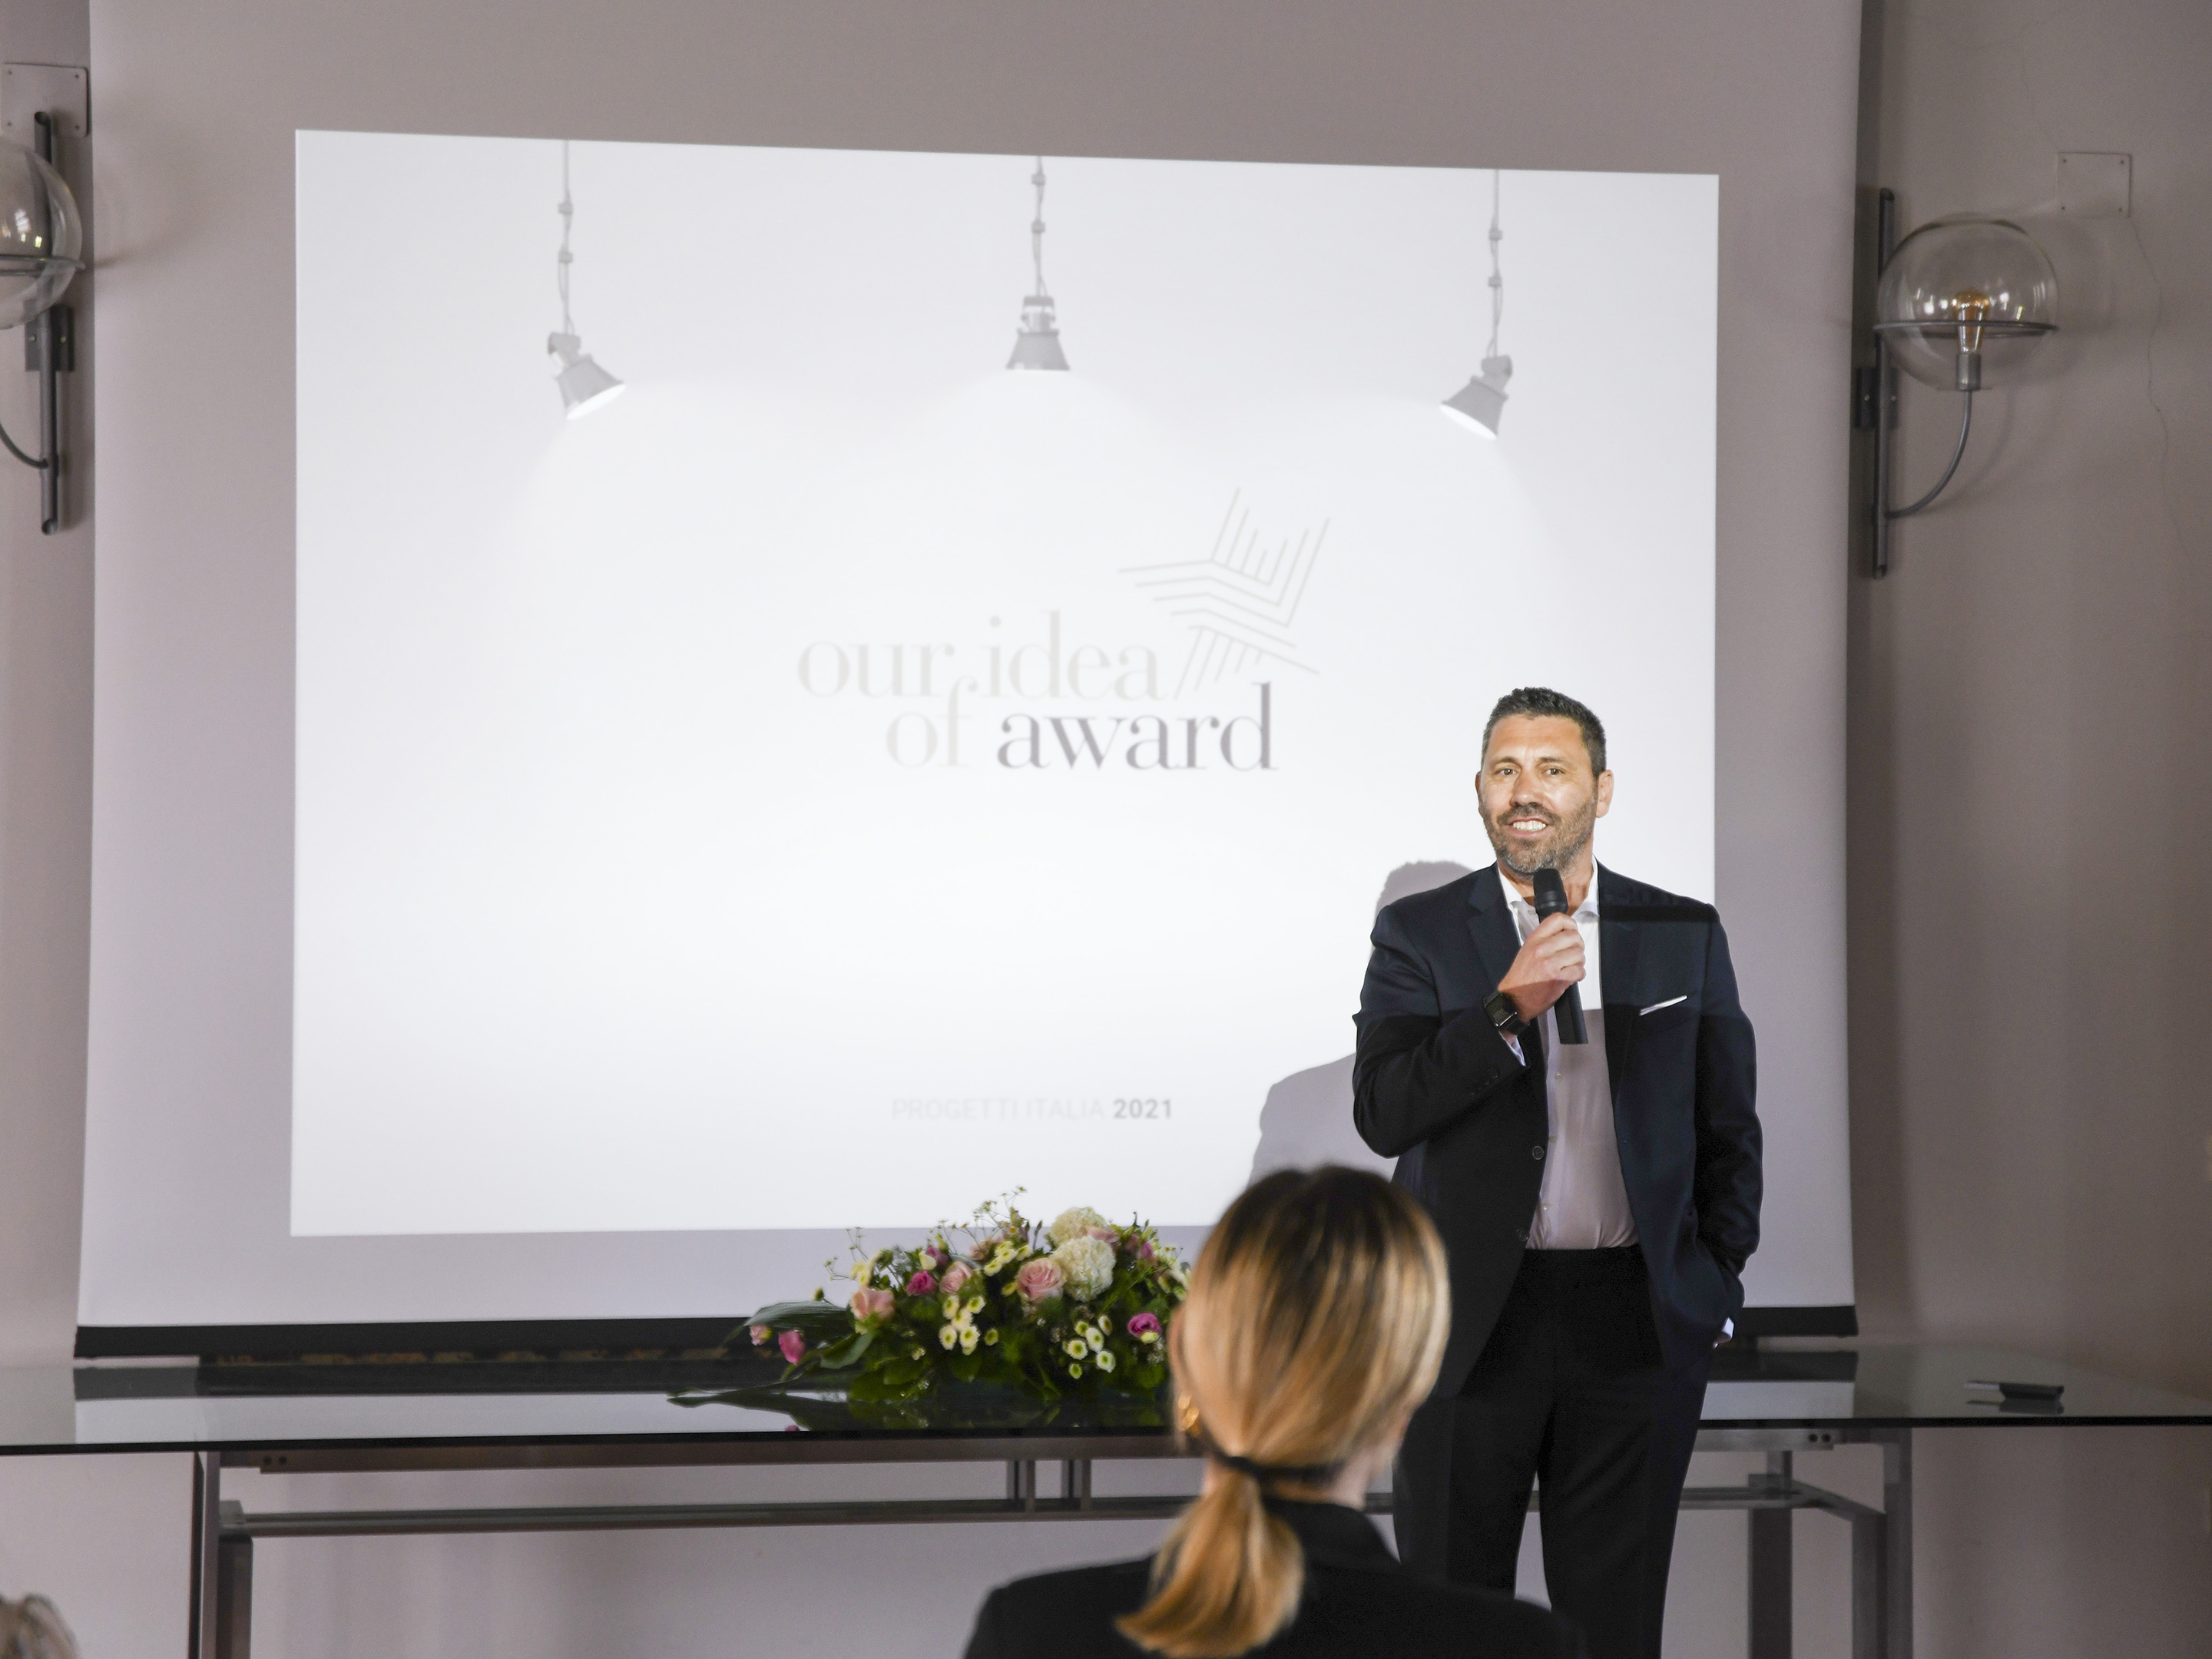 Our Idea of Award – Italian Edition